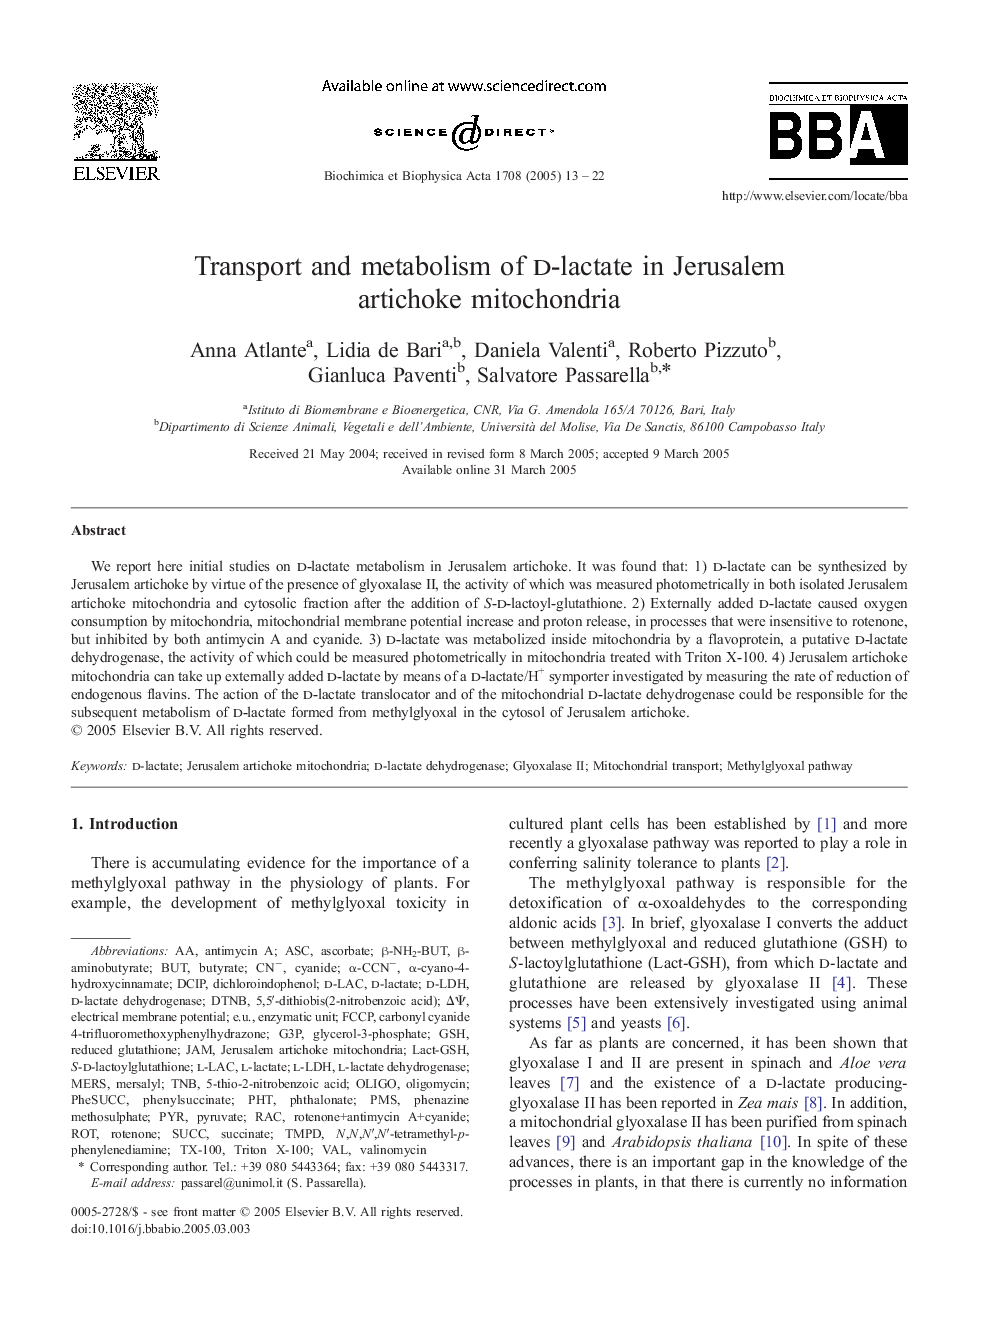 Transport and metabolism of d-lactate in Jerusalem artichoke mitochondria